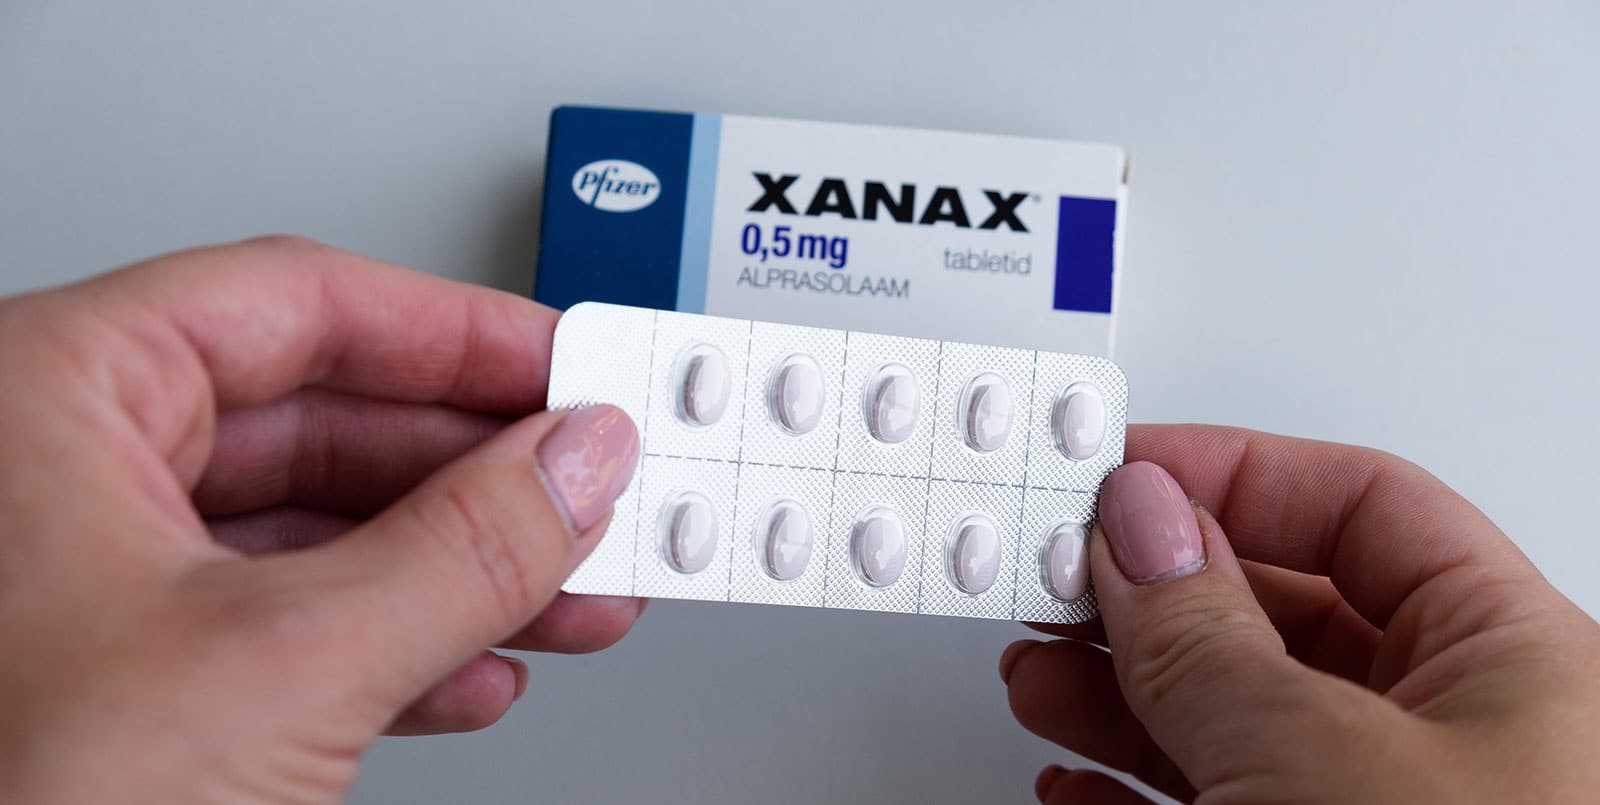 What Schedule Drug is Xanax?